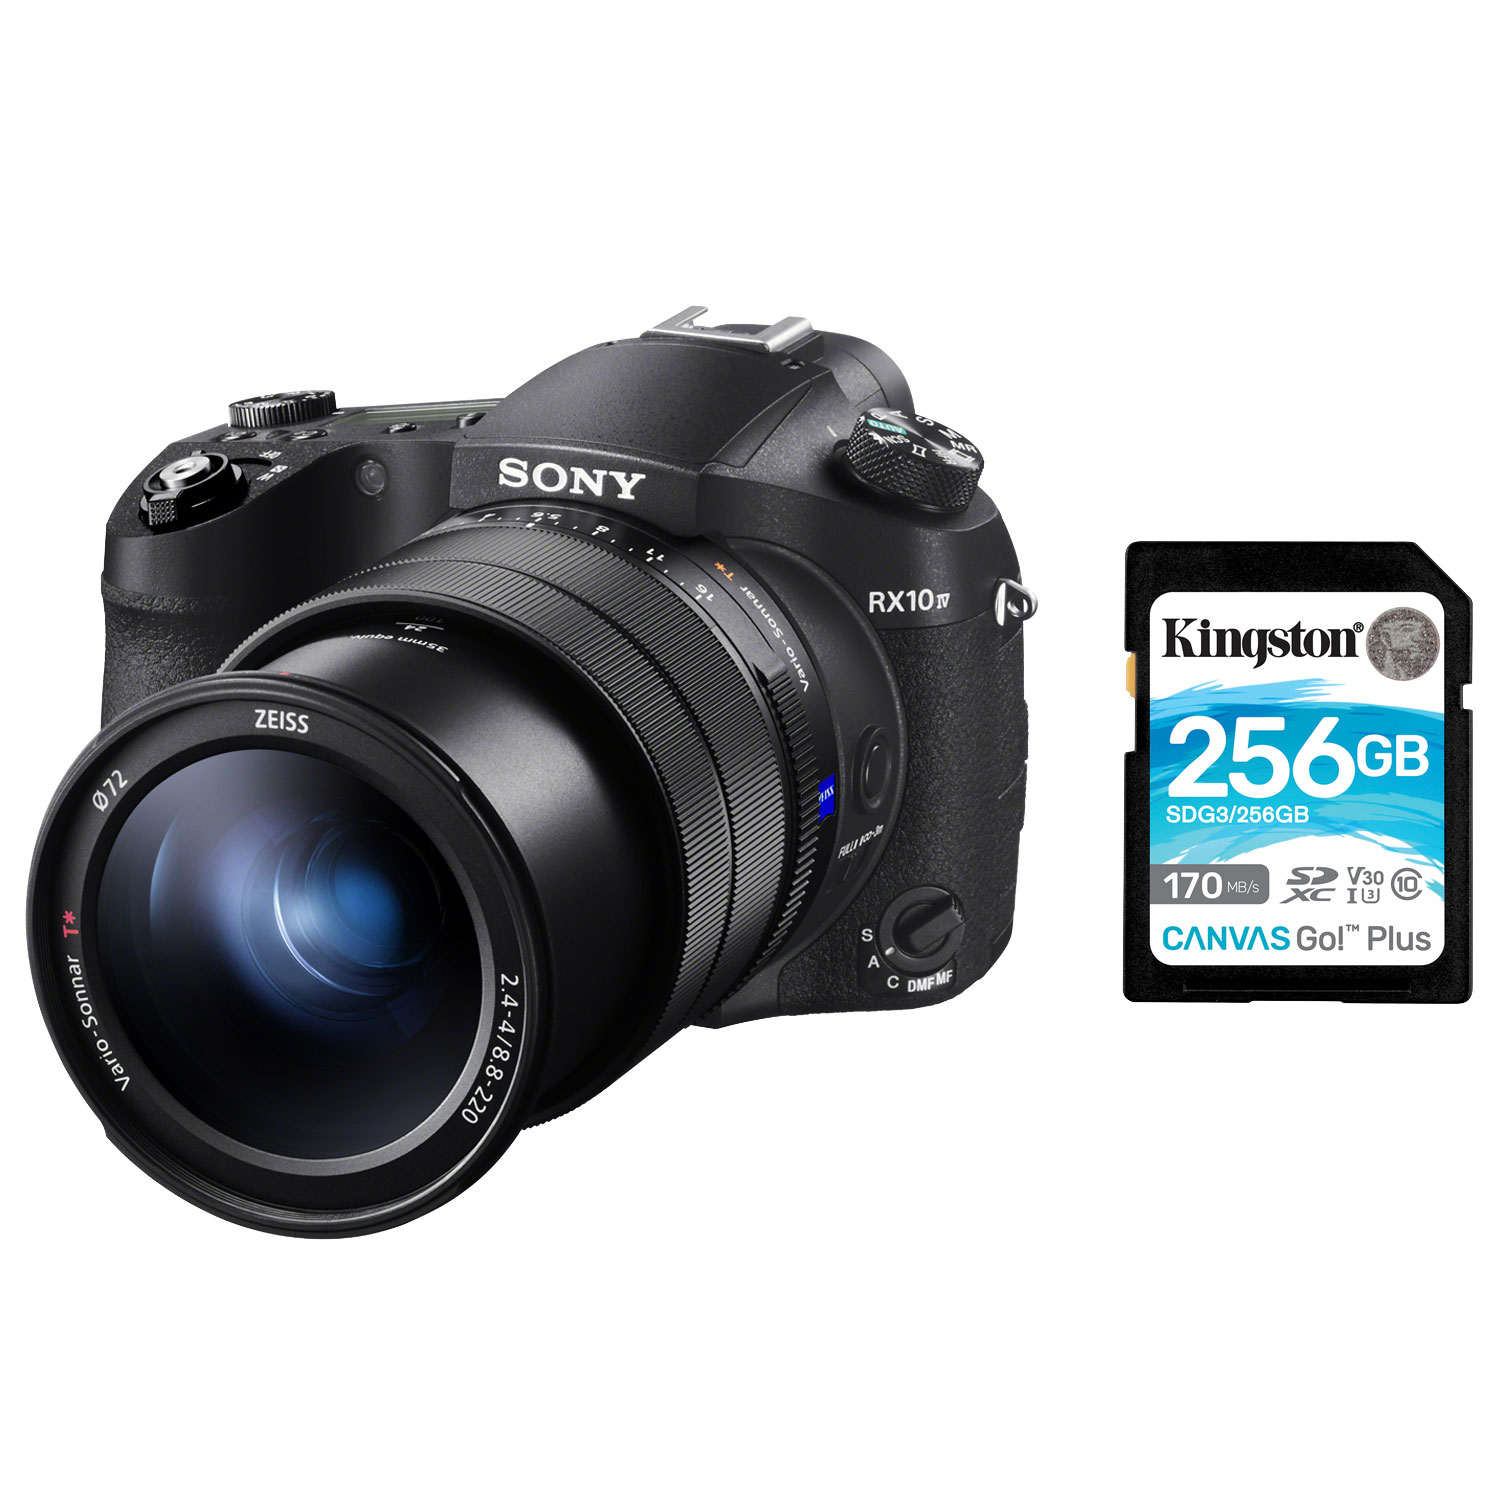 Sony Cyber-shot RX10 IV Wi-Fi 21MP 25x Optical Zoom Digital Camera w/ 256GB 170MB/s SDXC Memory Card - Black